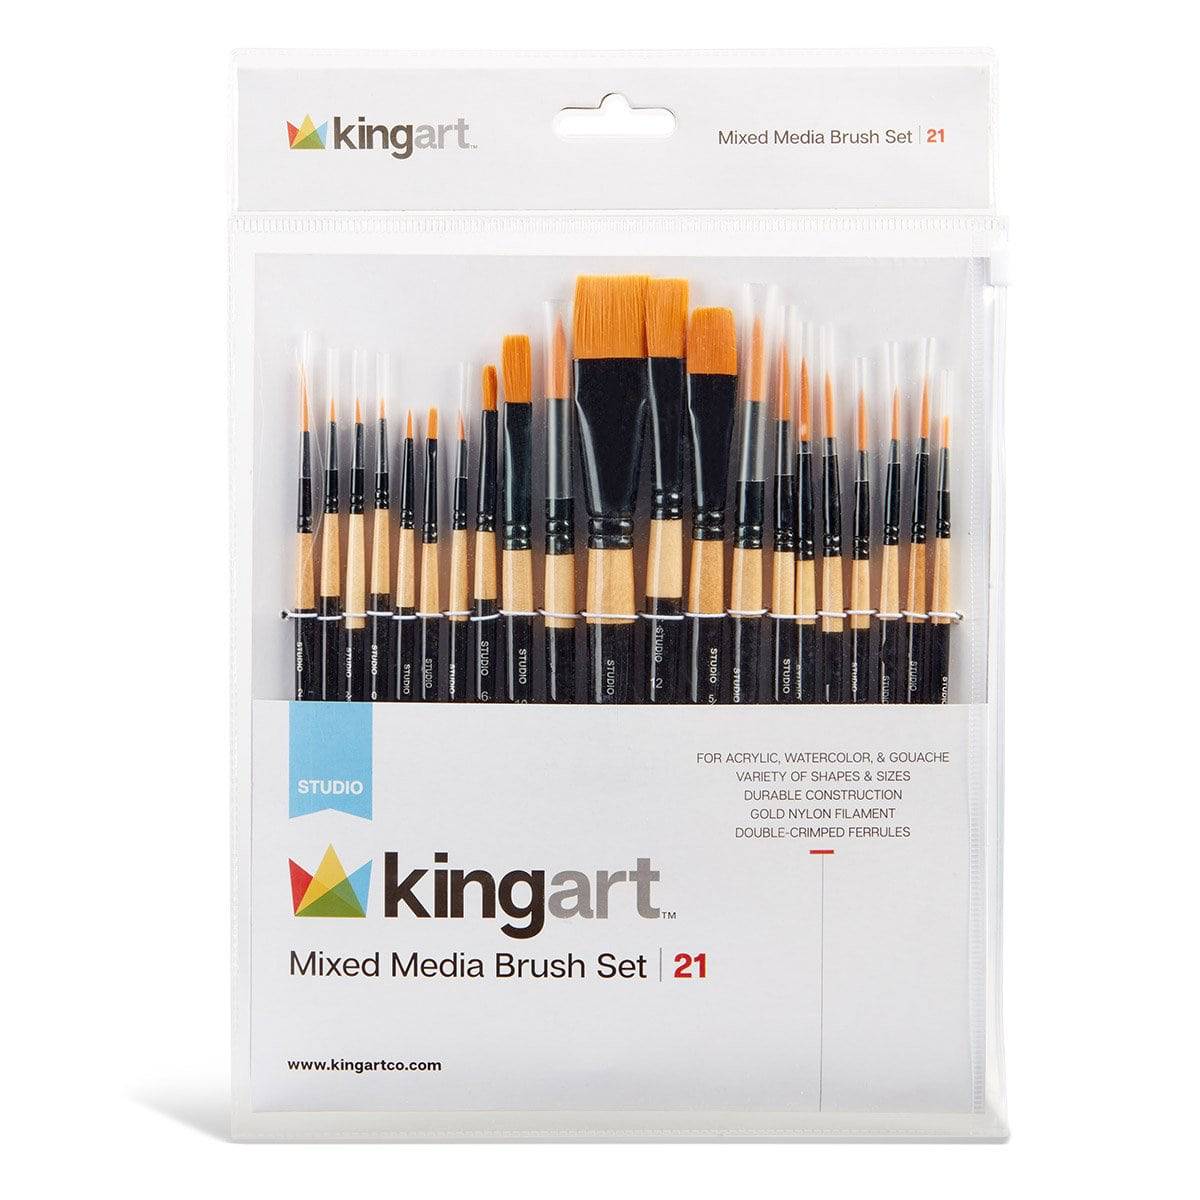 Artist's Organizer by Kingart (former Multi bin by L/C) - Brushes